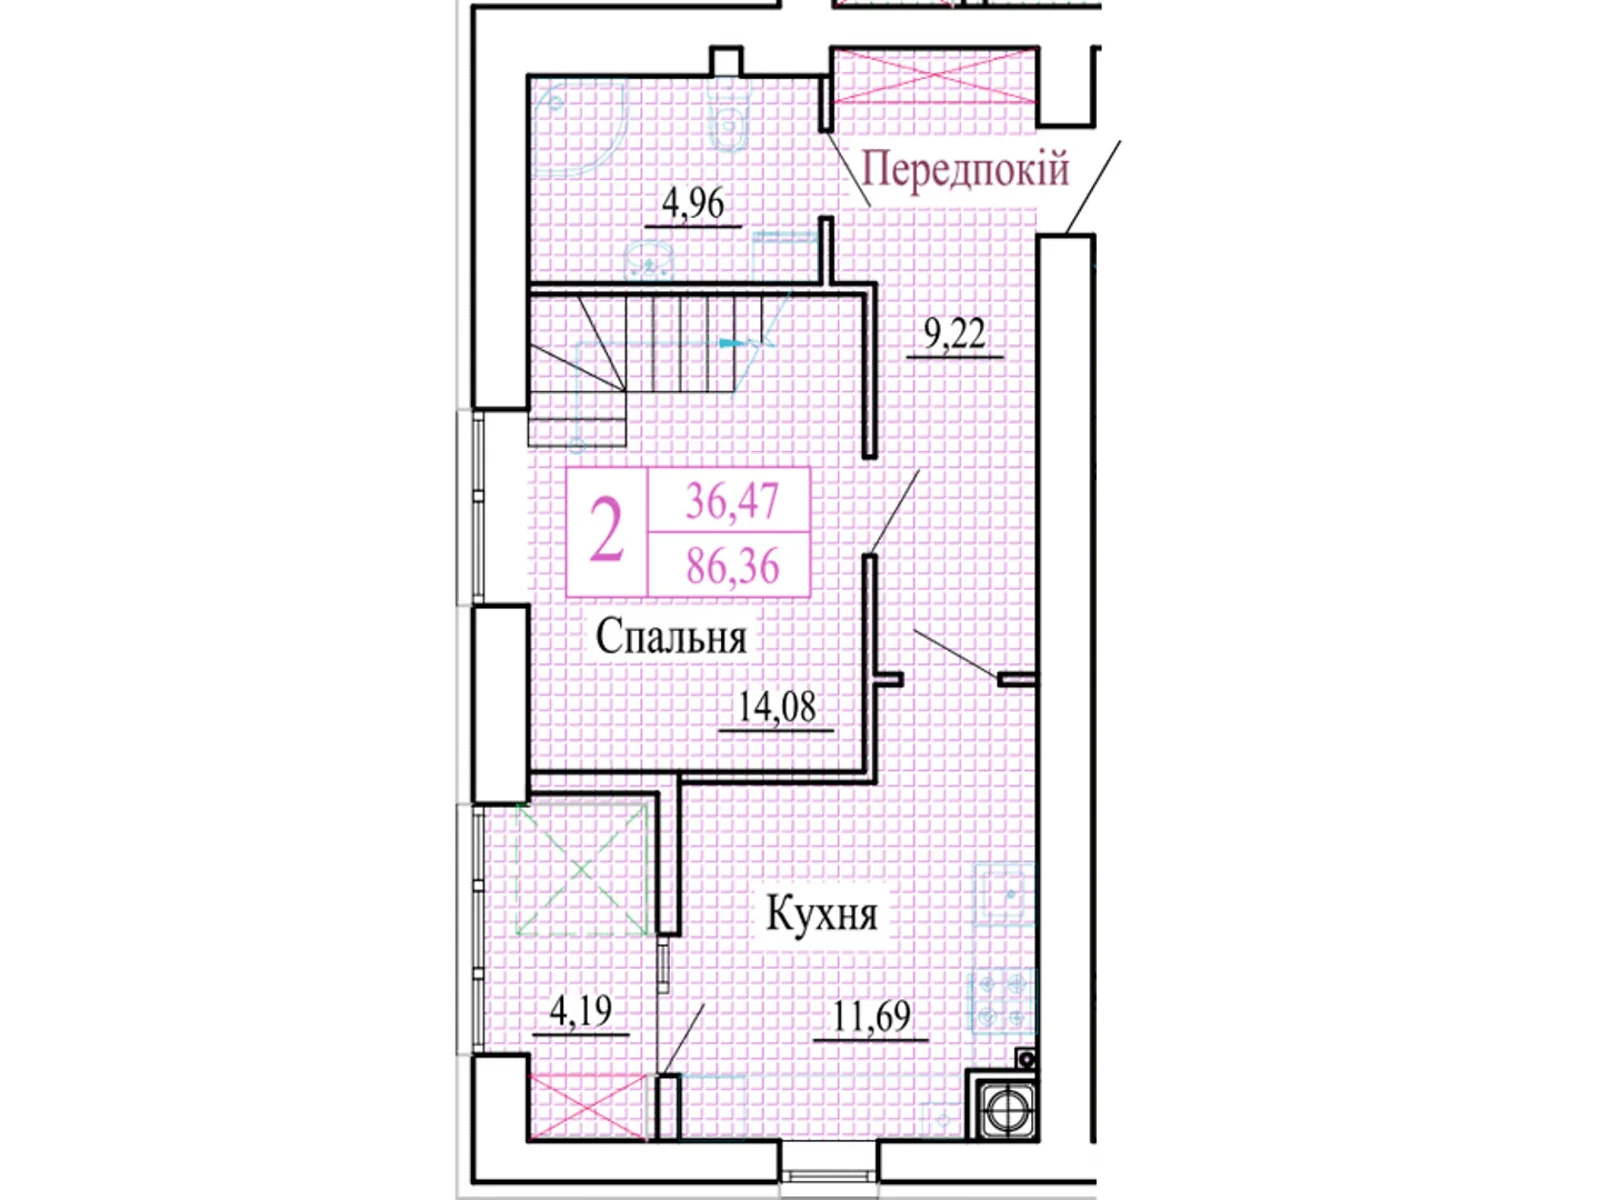 2-кімнатна квартира 86.36 кв. м у Луцьку, цена: 69174 $